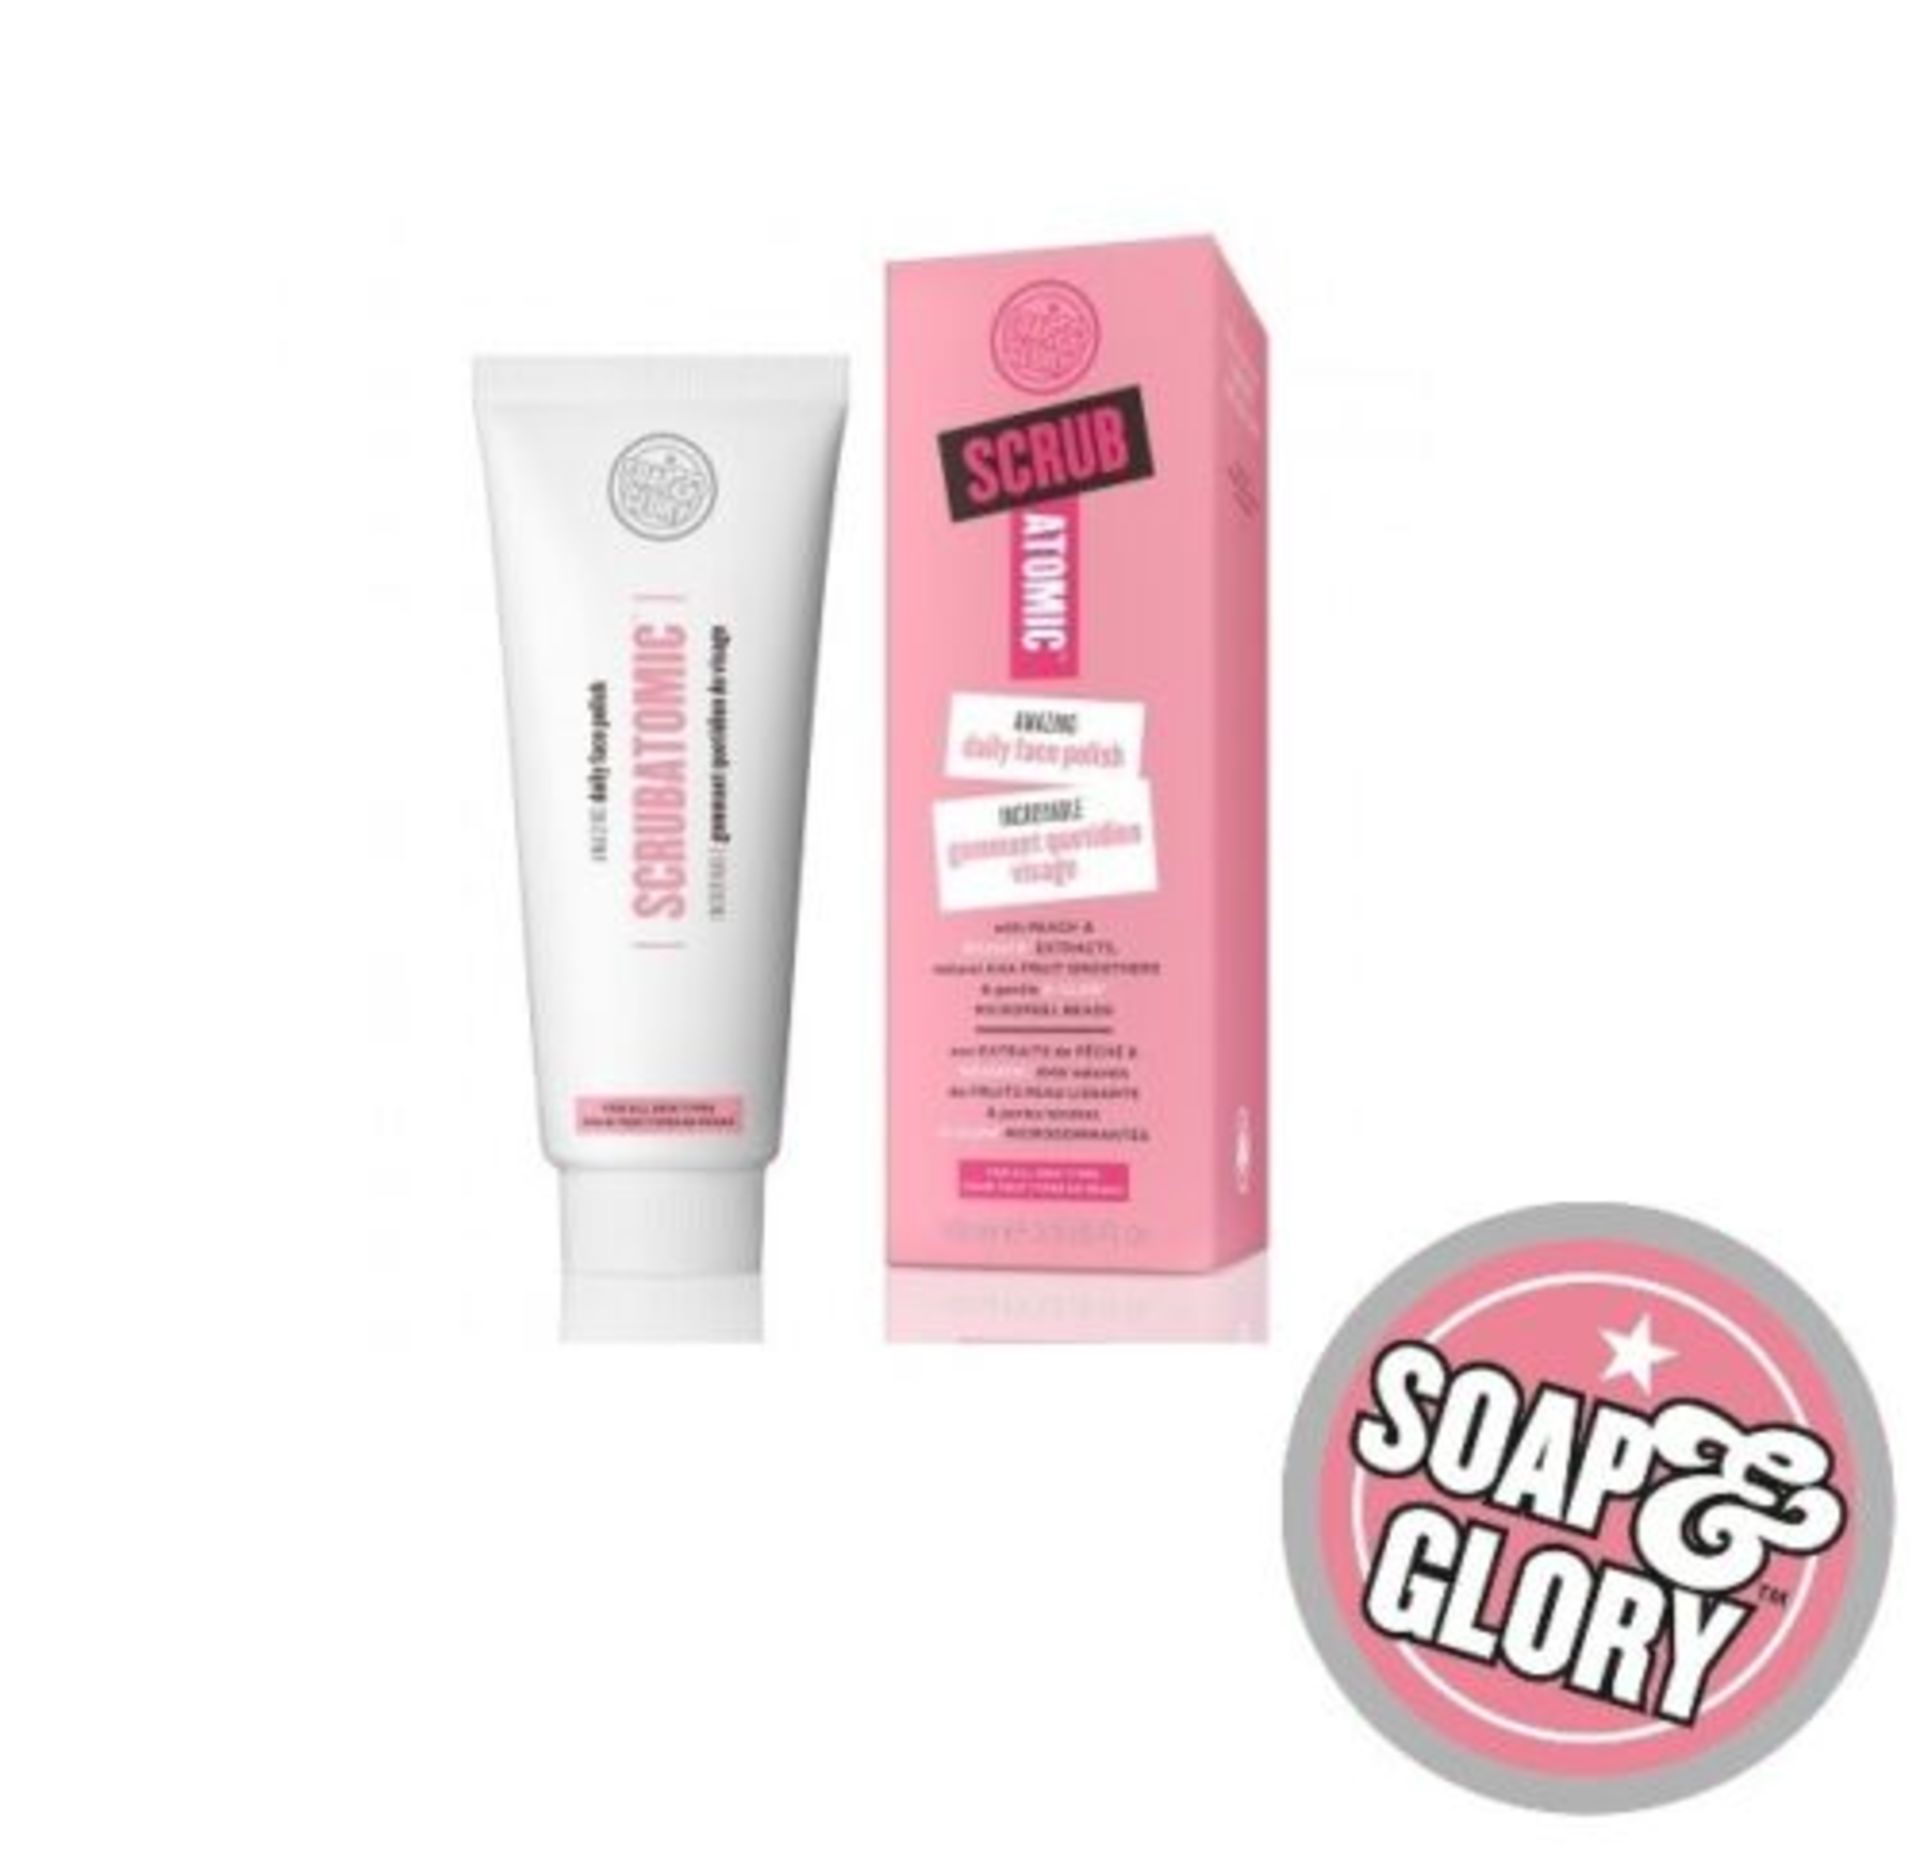 10 x Soap & Glory Atomic Face Scrubs Job Lot Skincare